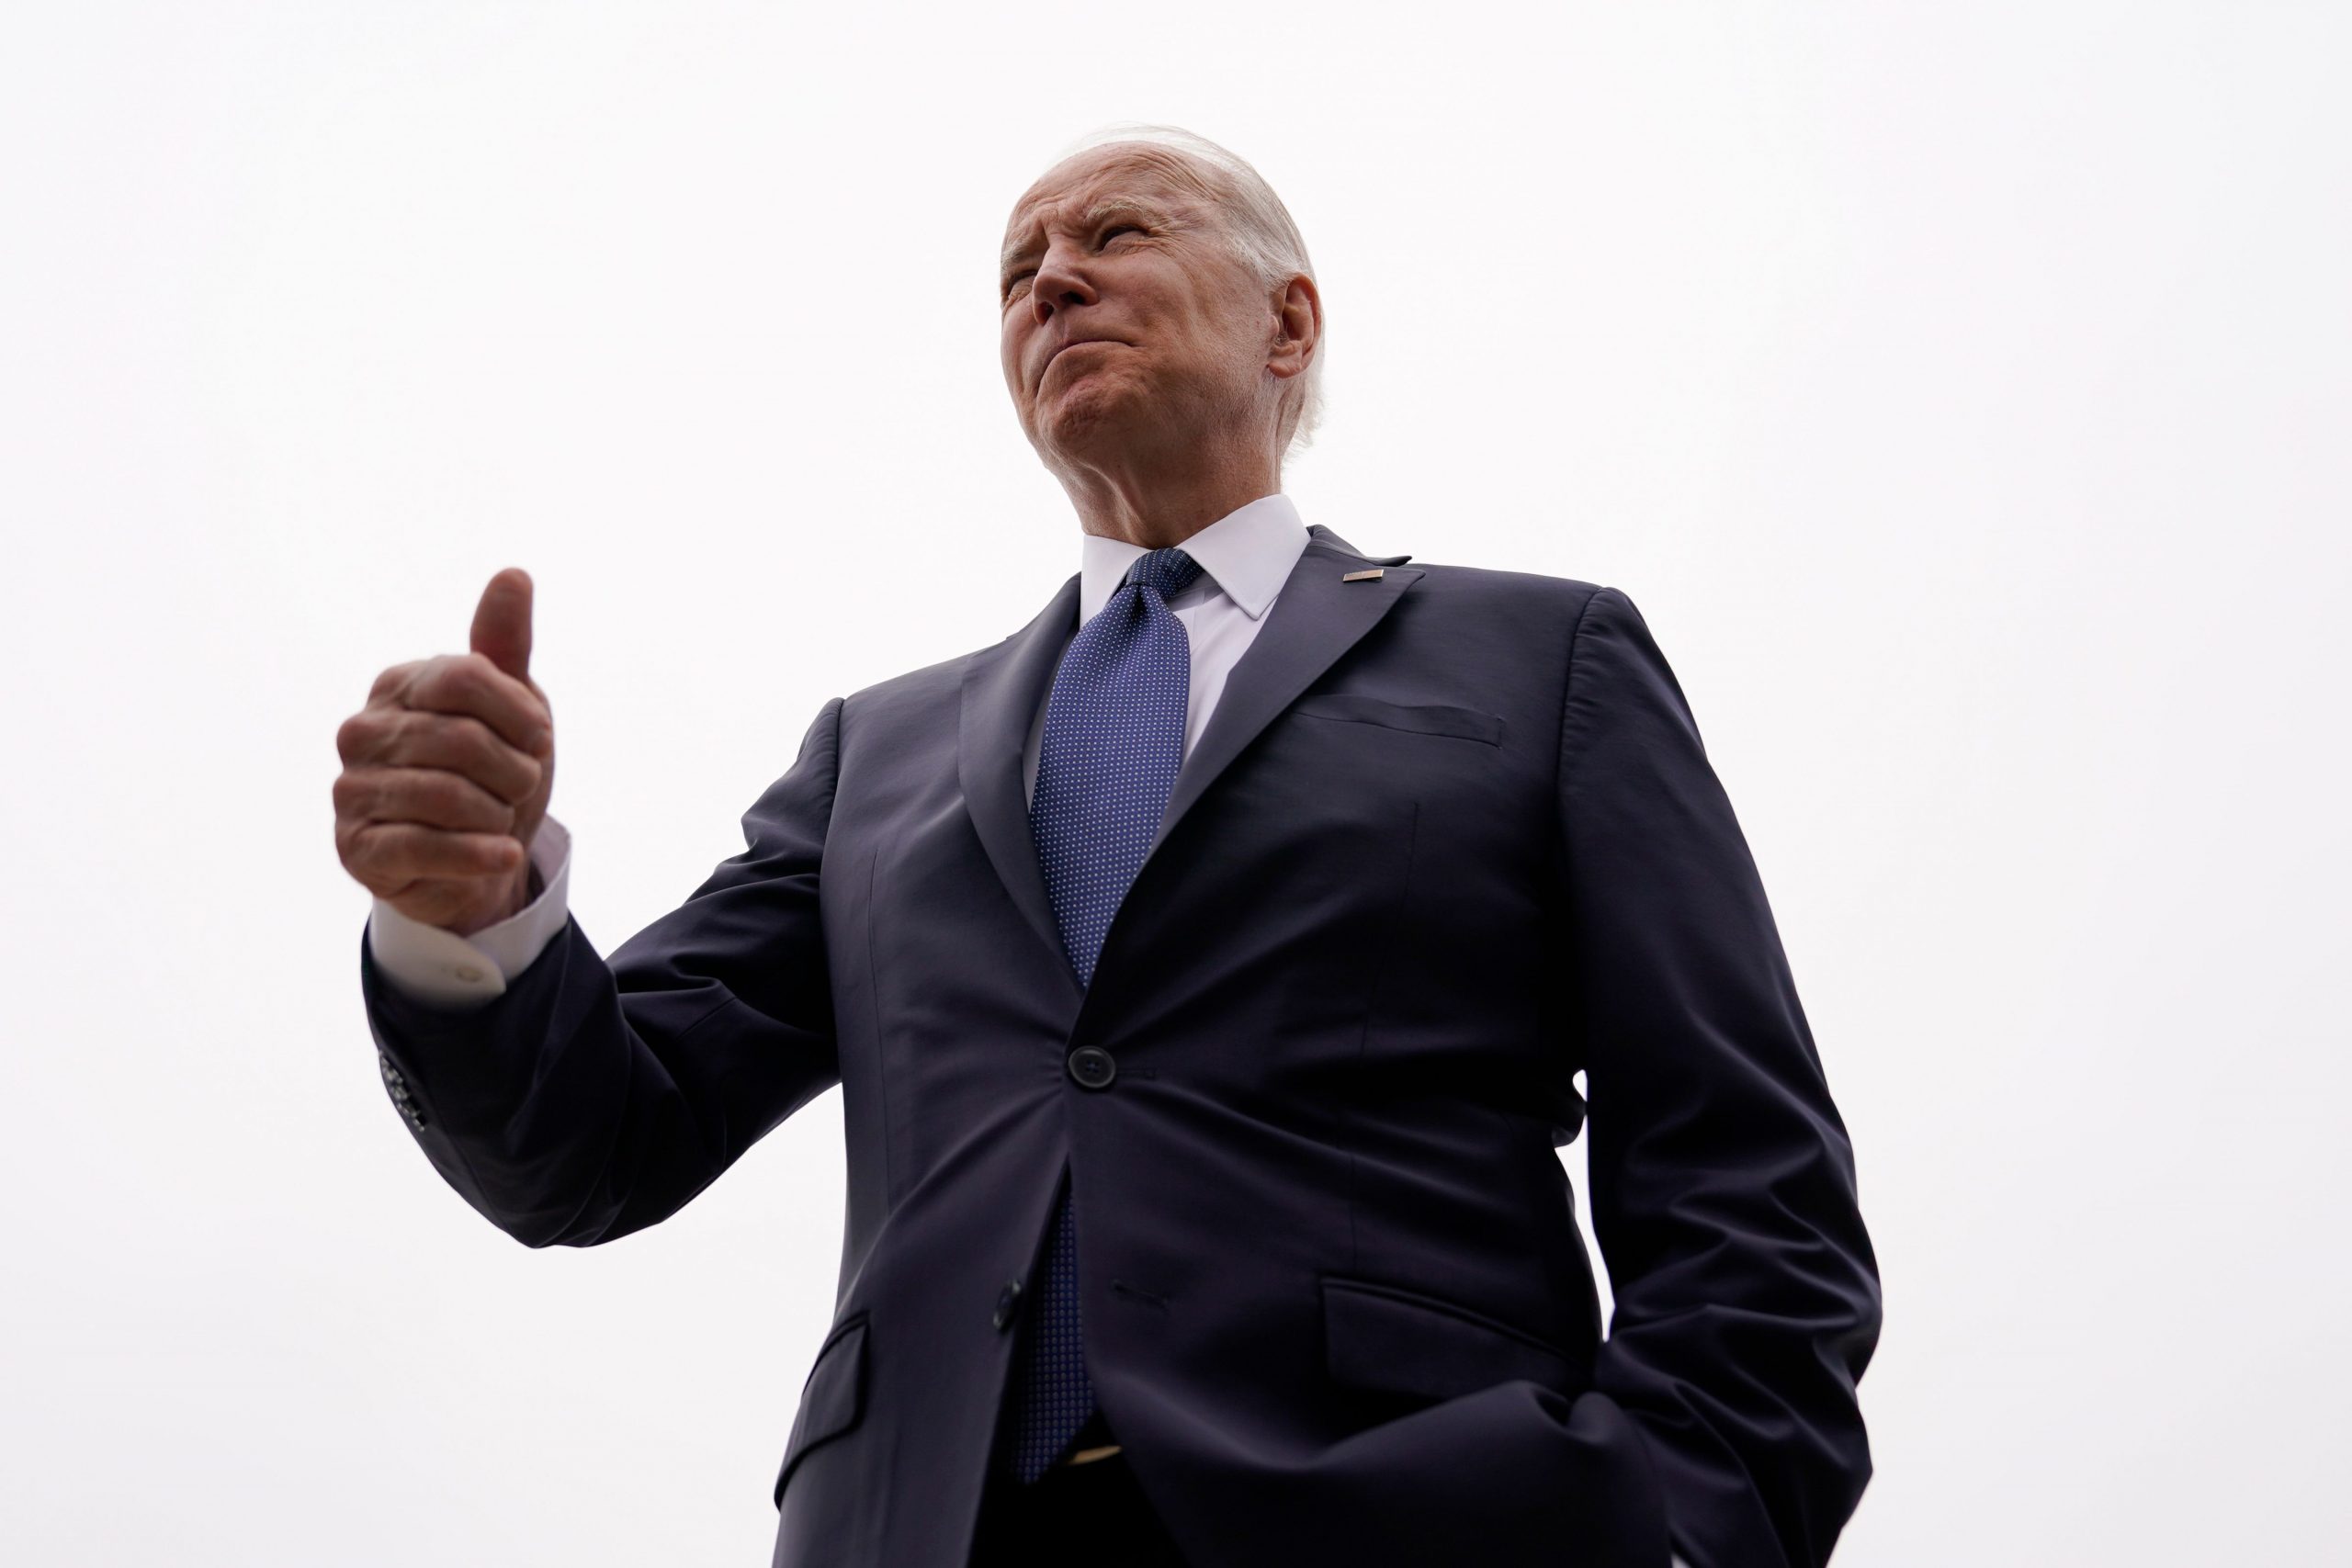 Activists keep up pressure as President Joe Biden weighs student debt move